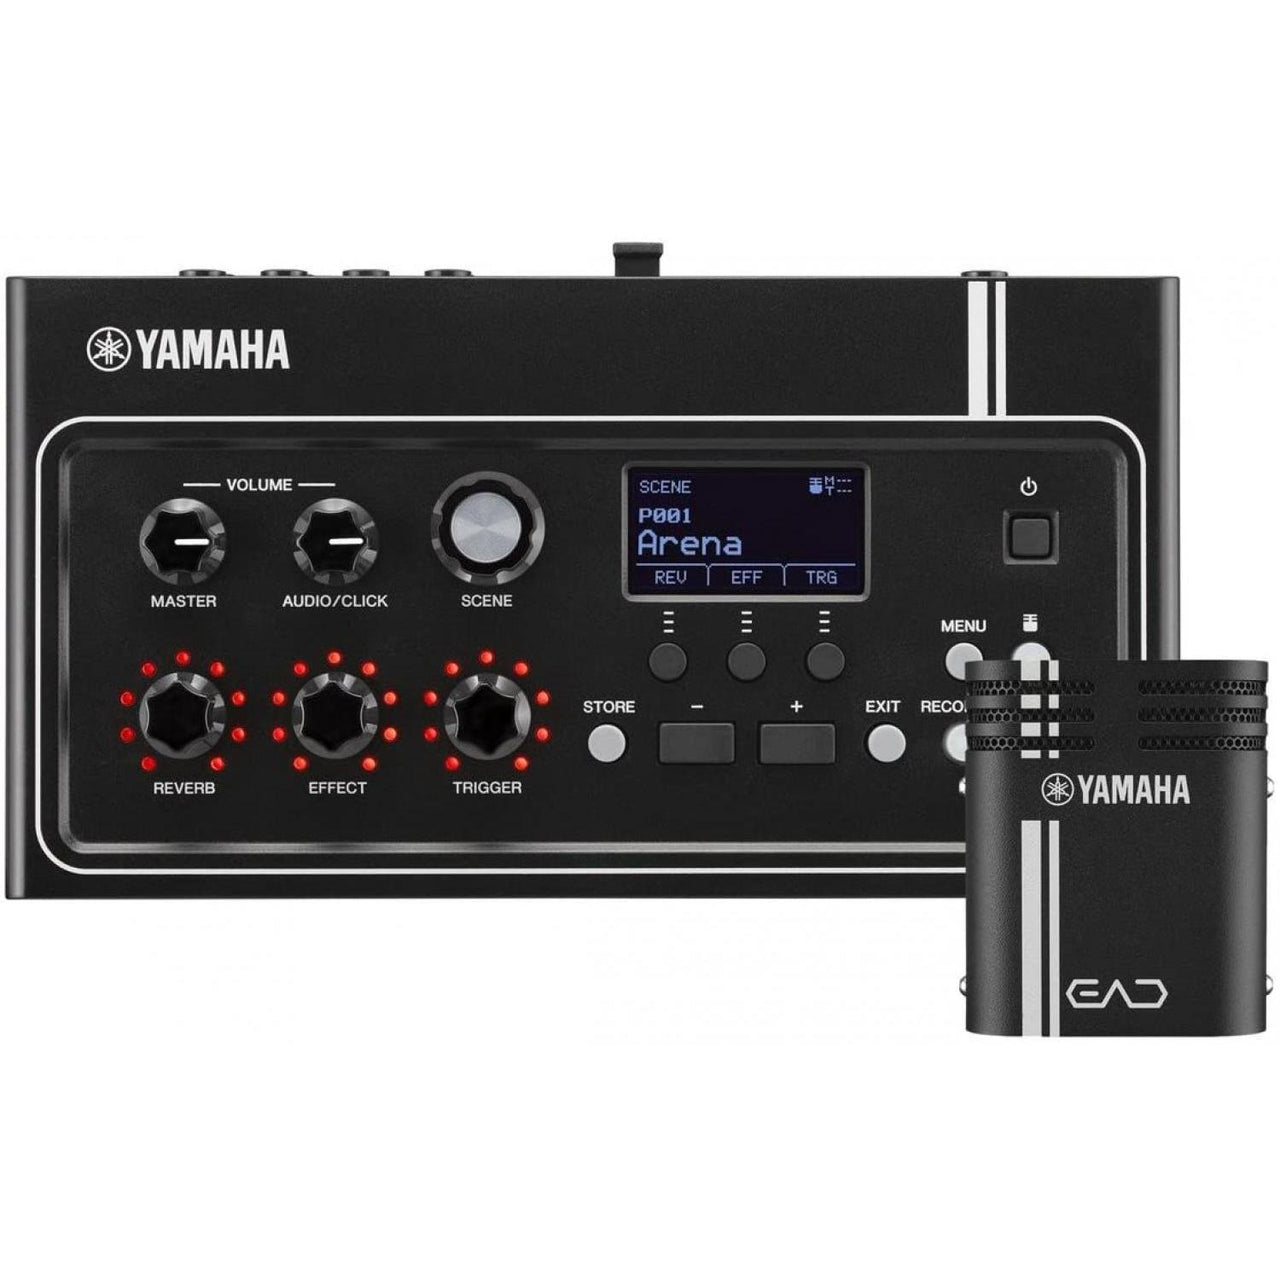 Modulo Electroacustico Yamaha P/Bateria C/Microfono, Ead-10